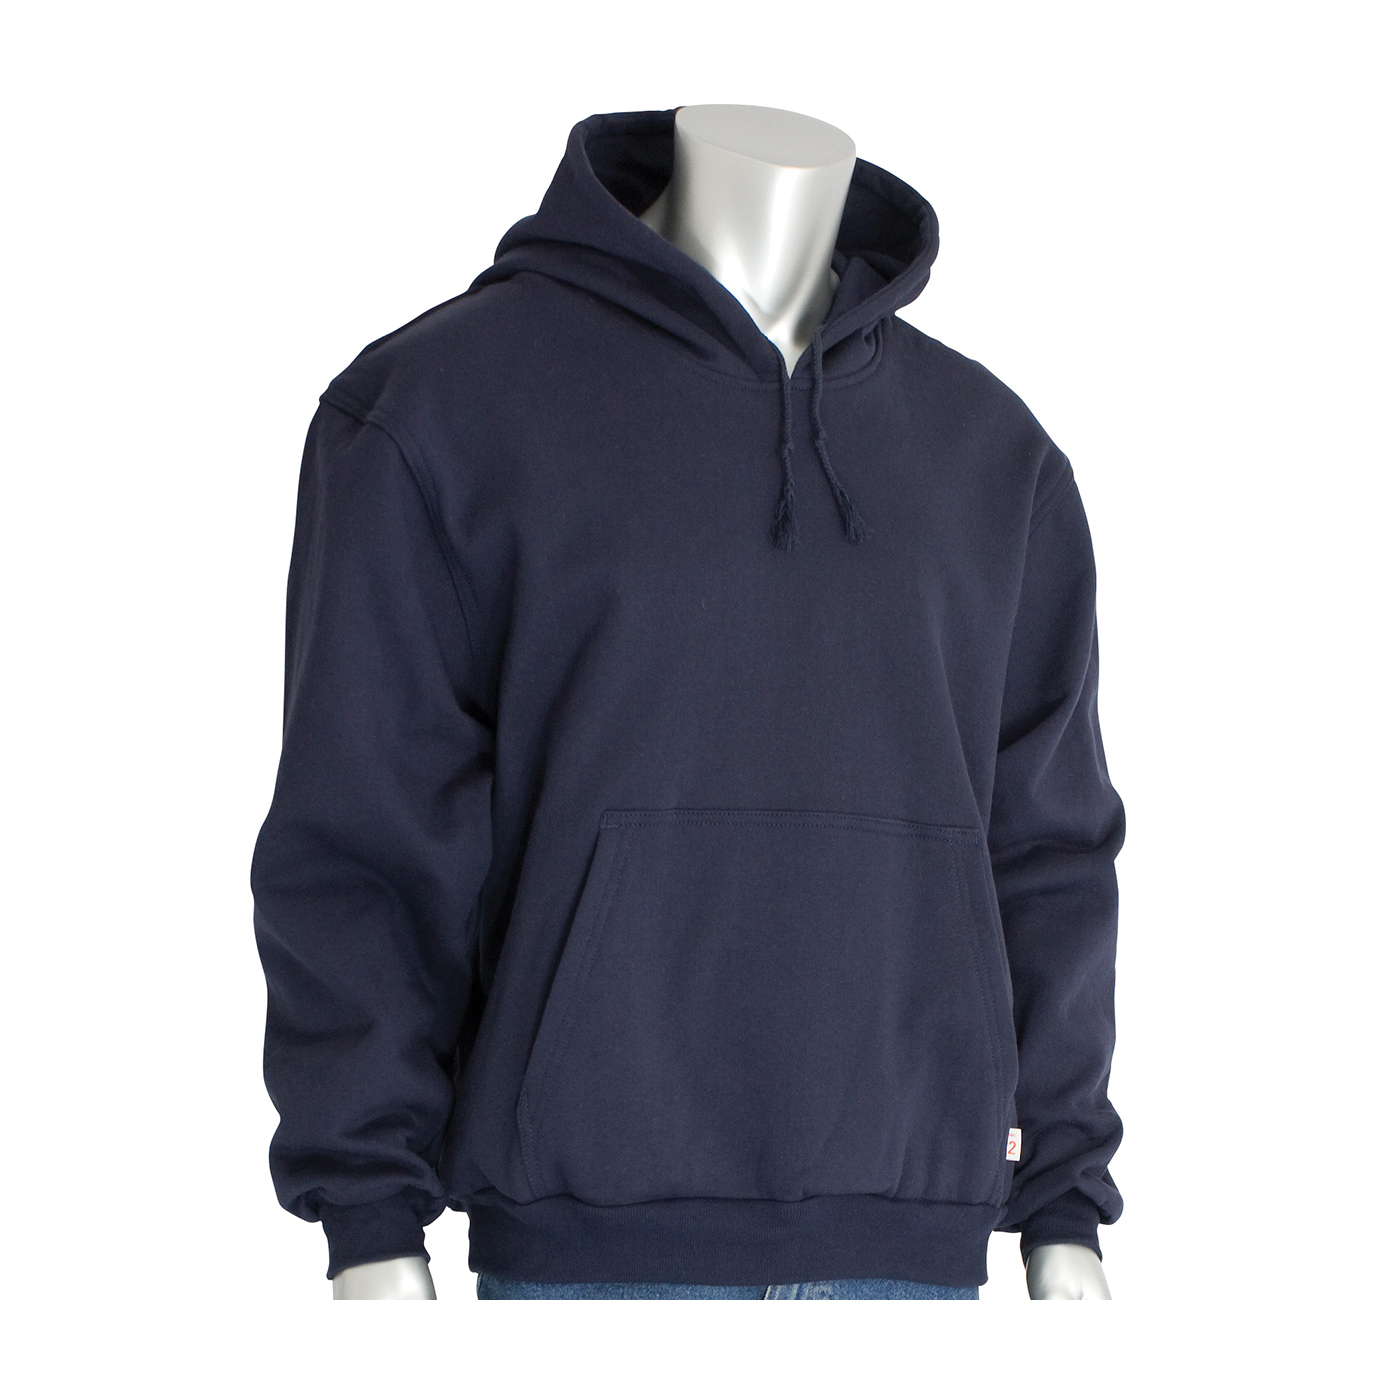 PIP® 385-FRPH-NV/2X Polartec® 385-FRPH Arc and Flame Resistant Sweatshirt, 2XL, Navy, FR Fleece Knit/100% Cotton, 33 in Regular, 34 in Tall L